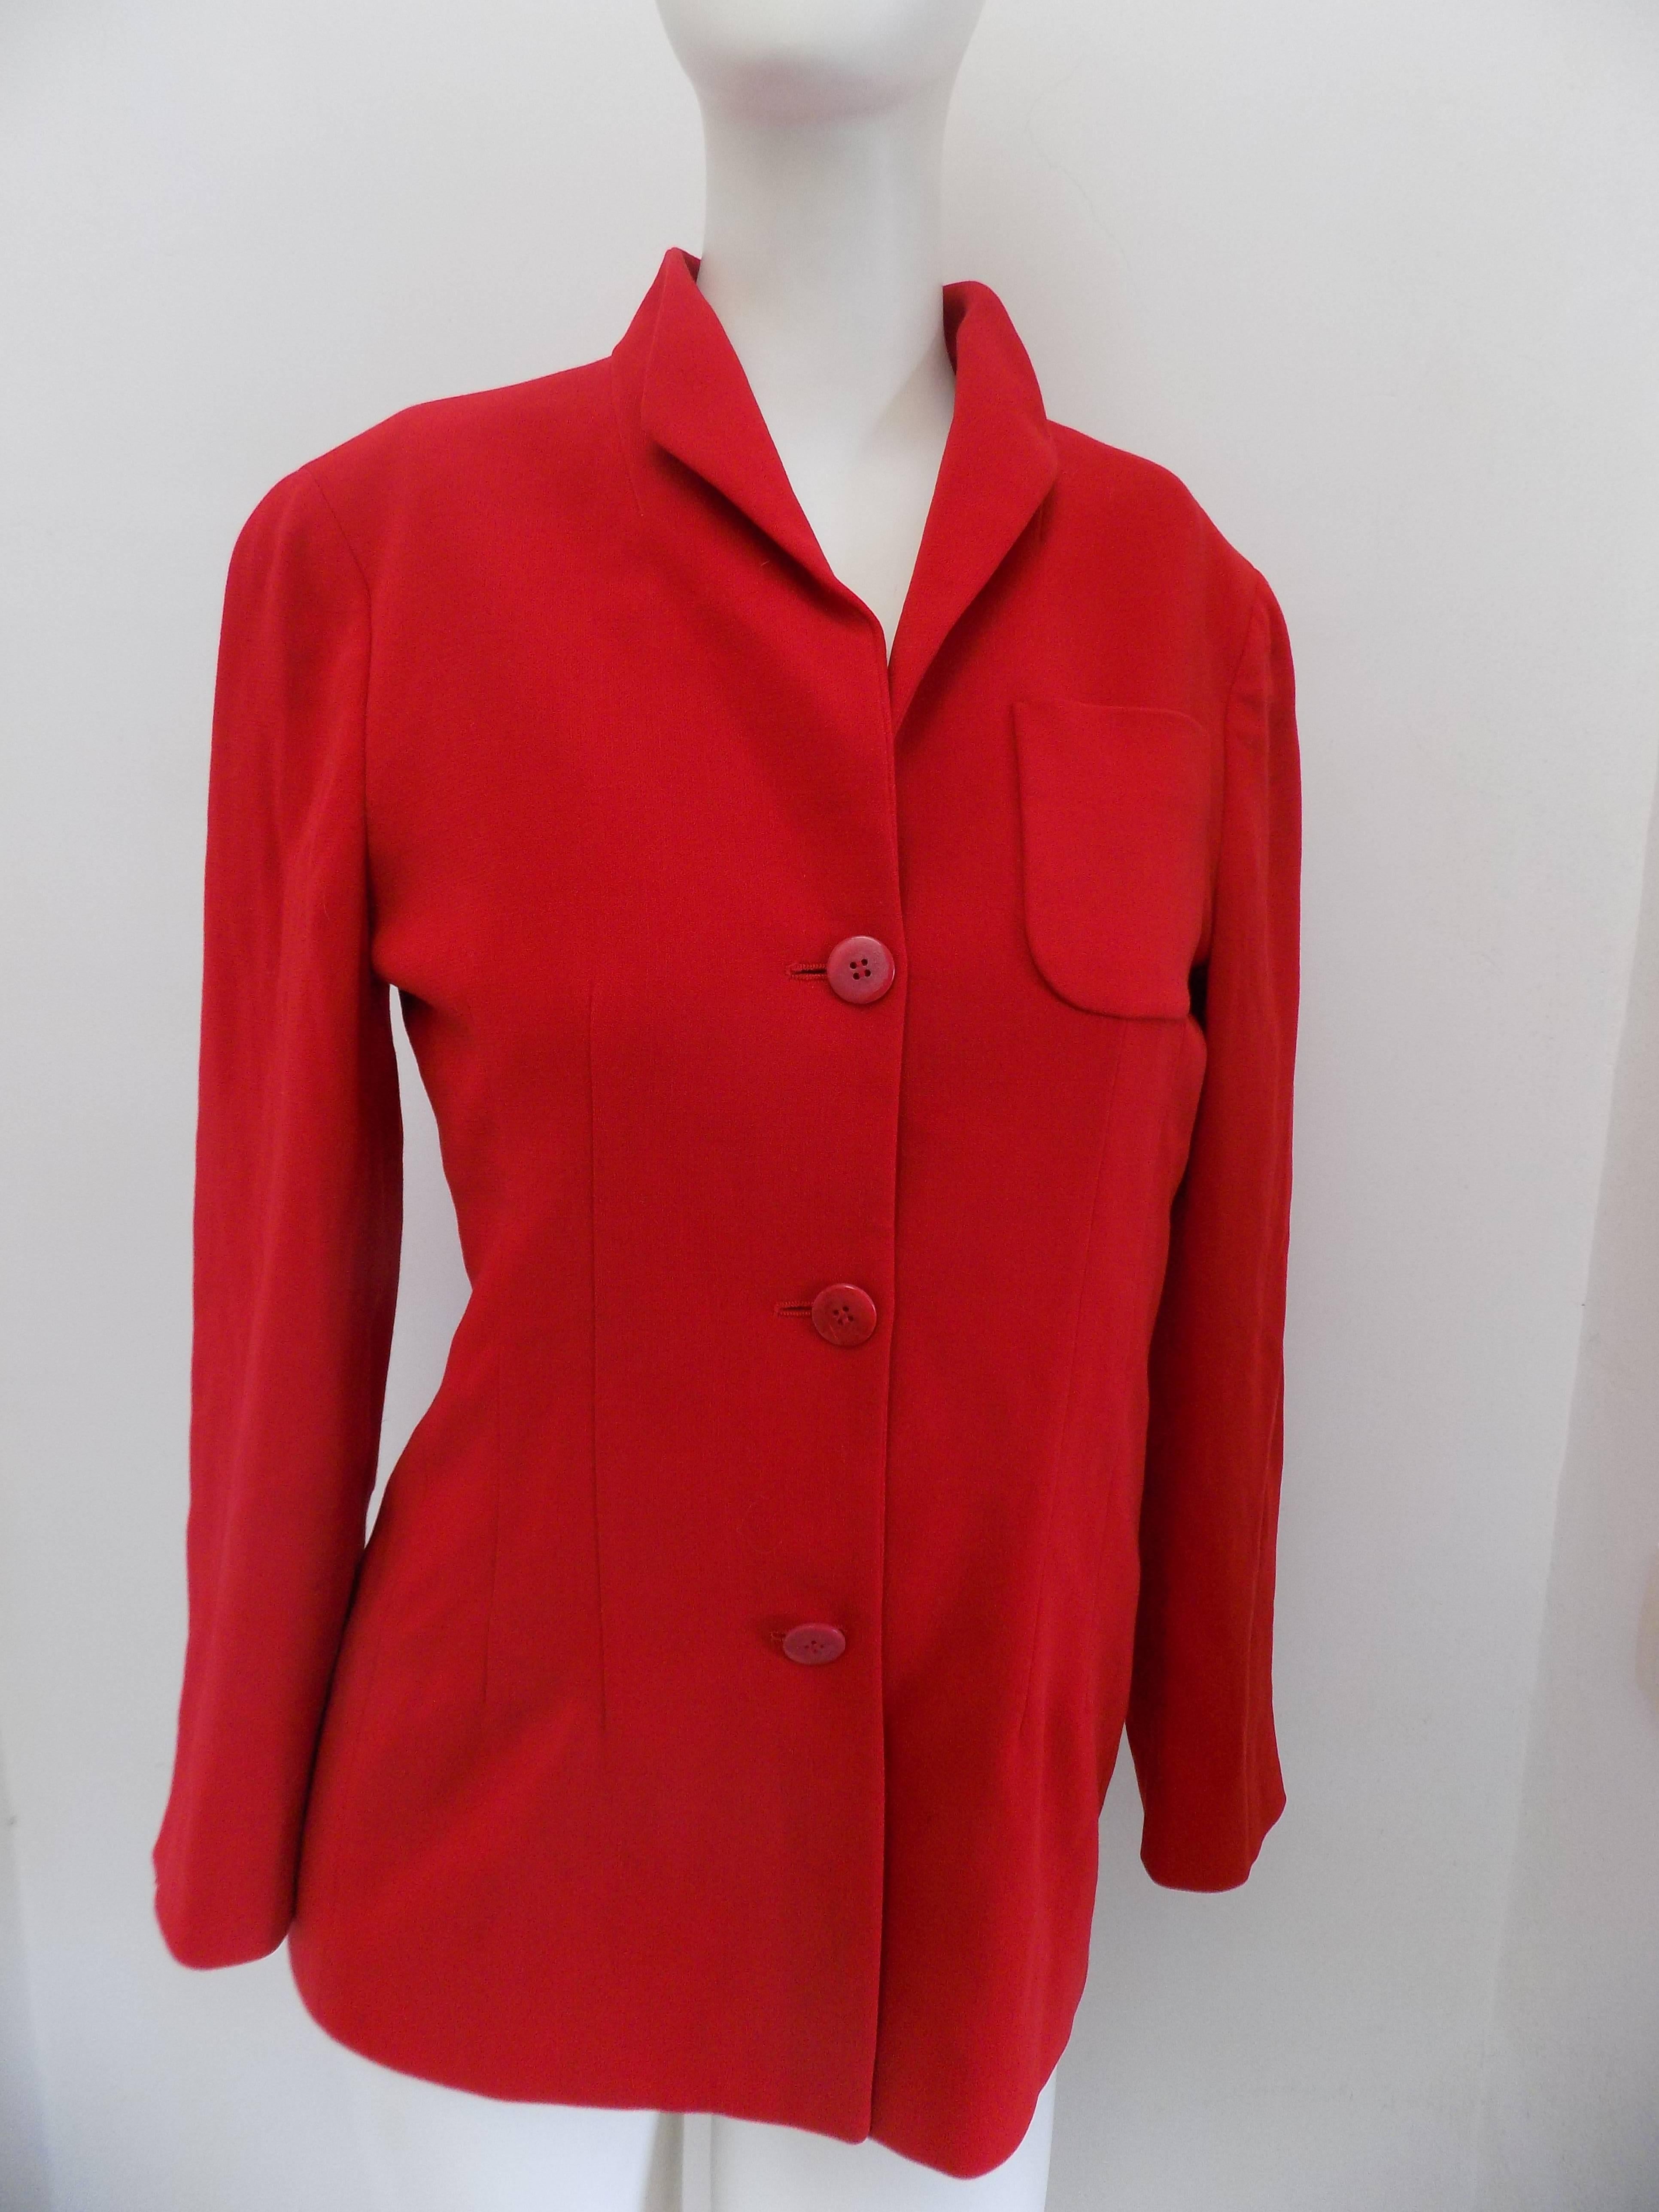 Giorgio Armani red jacket in size 36 italian size 40
composition silk and cotton